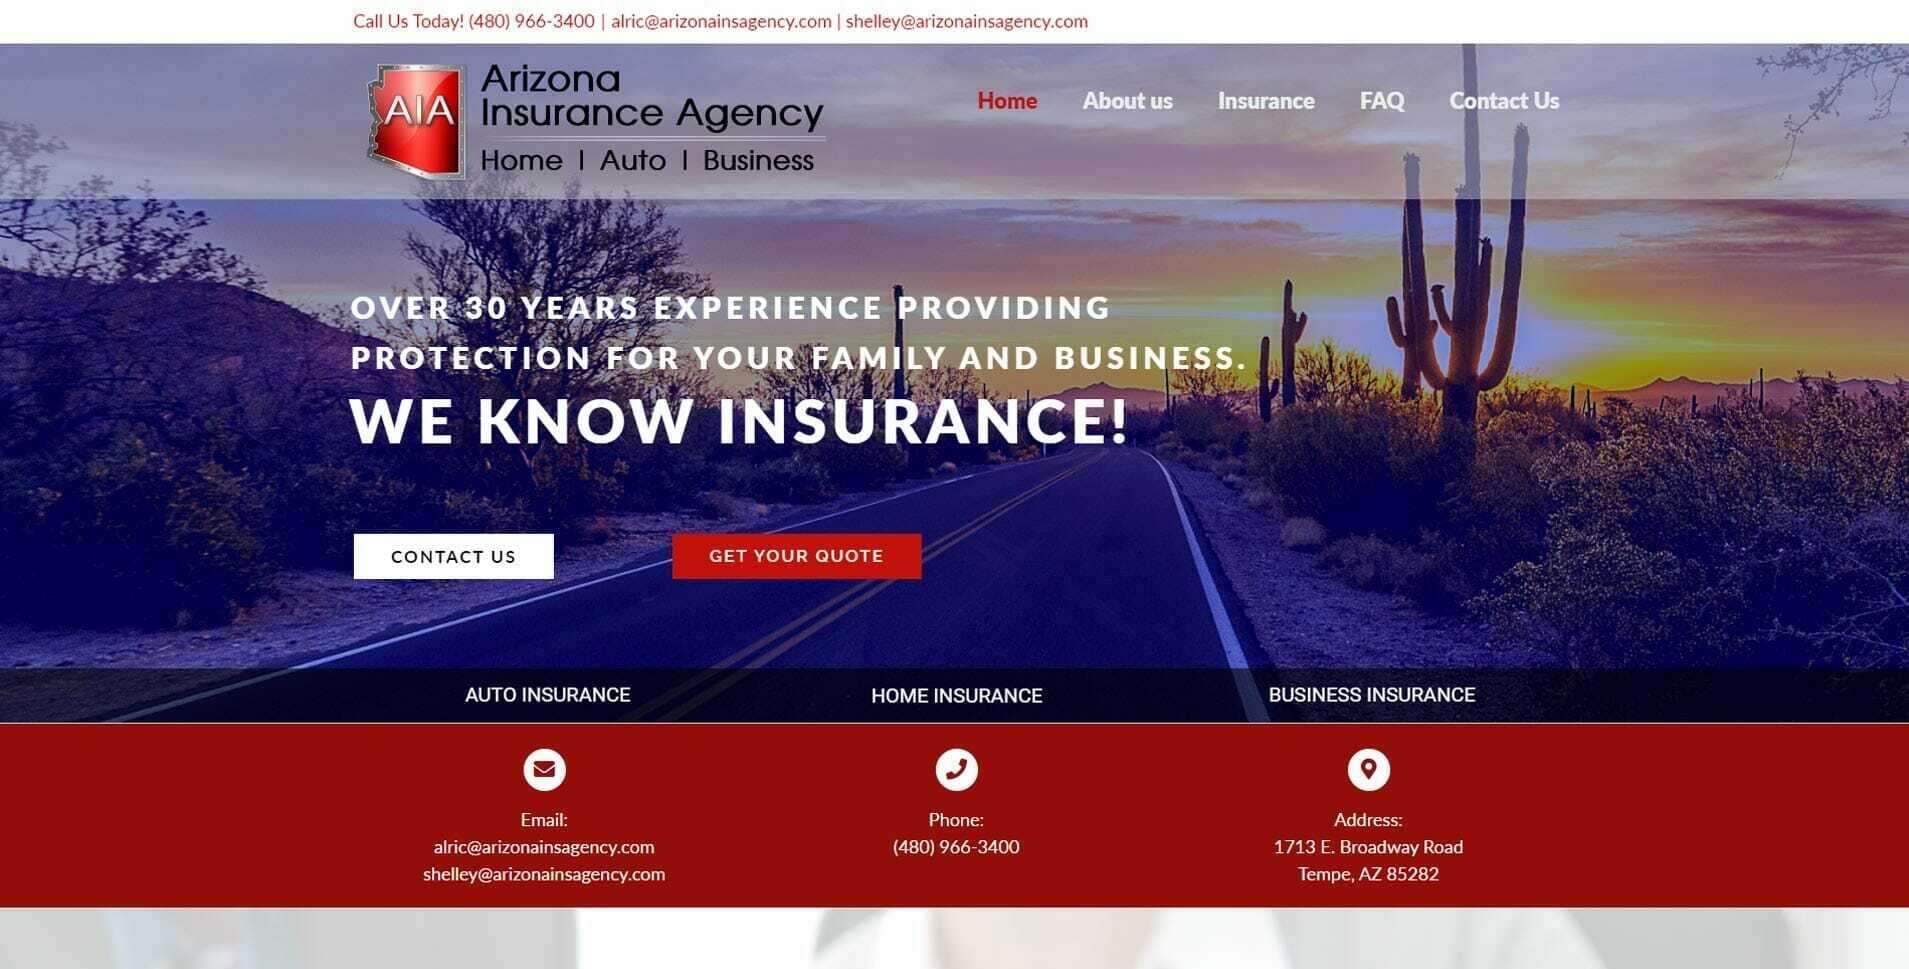 Arizona Insurance website